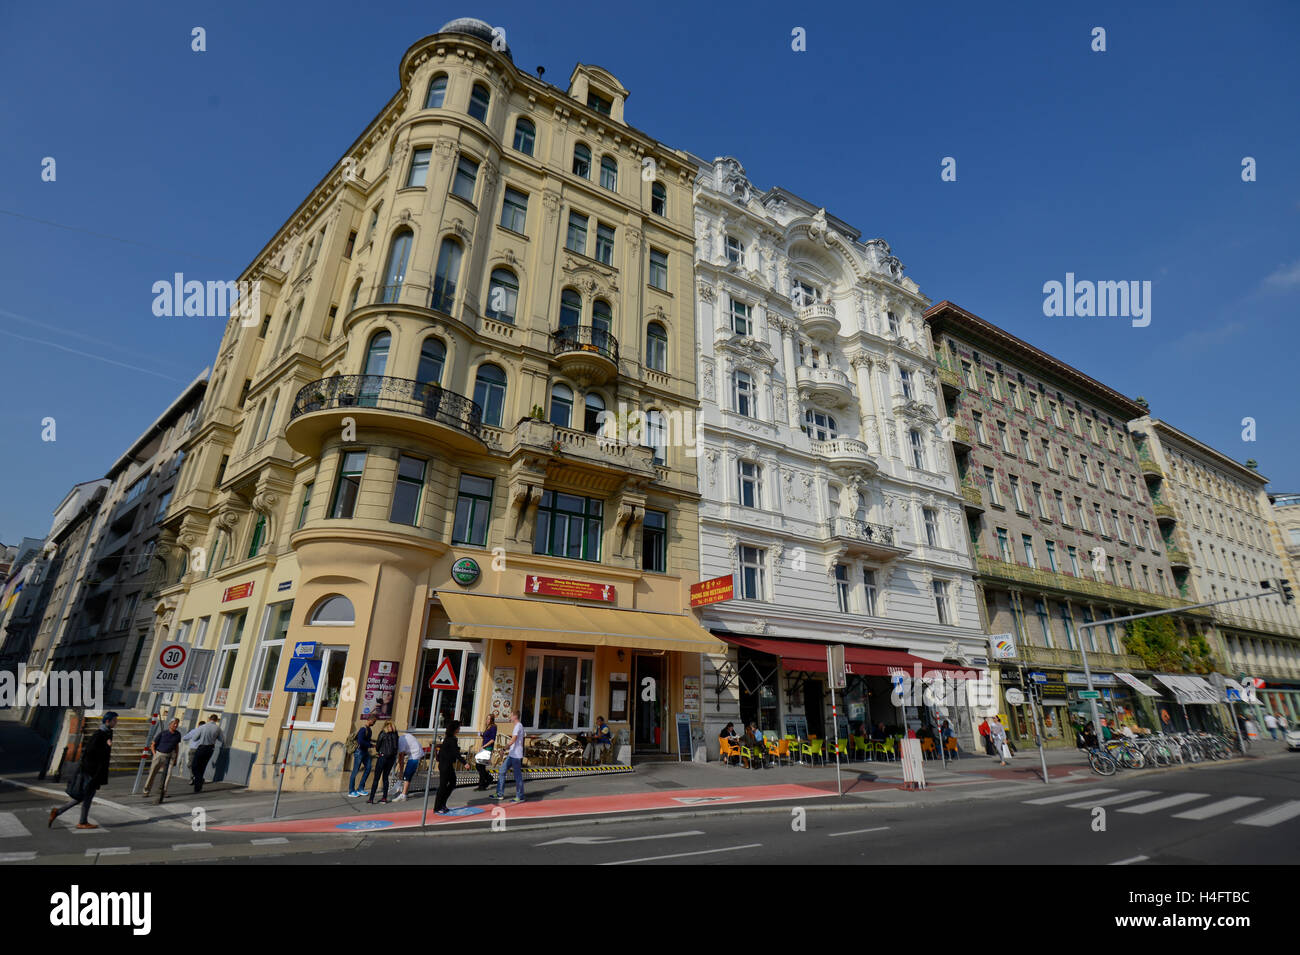 Linke Wienzeile angolo di strada. Majolikahaus e Otto Wagner House. Vienna, Austria Foto Stock